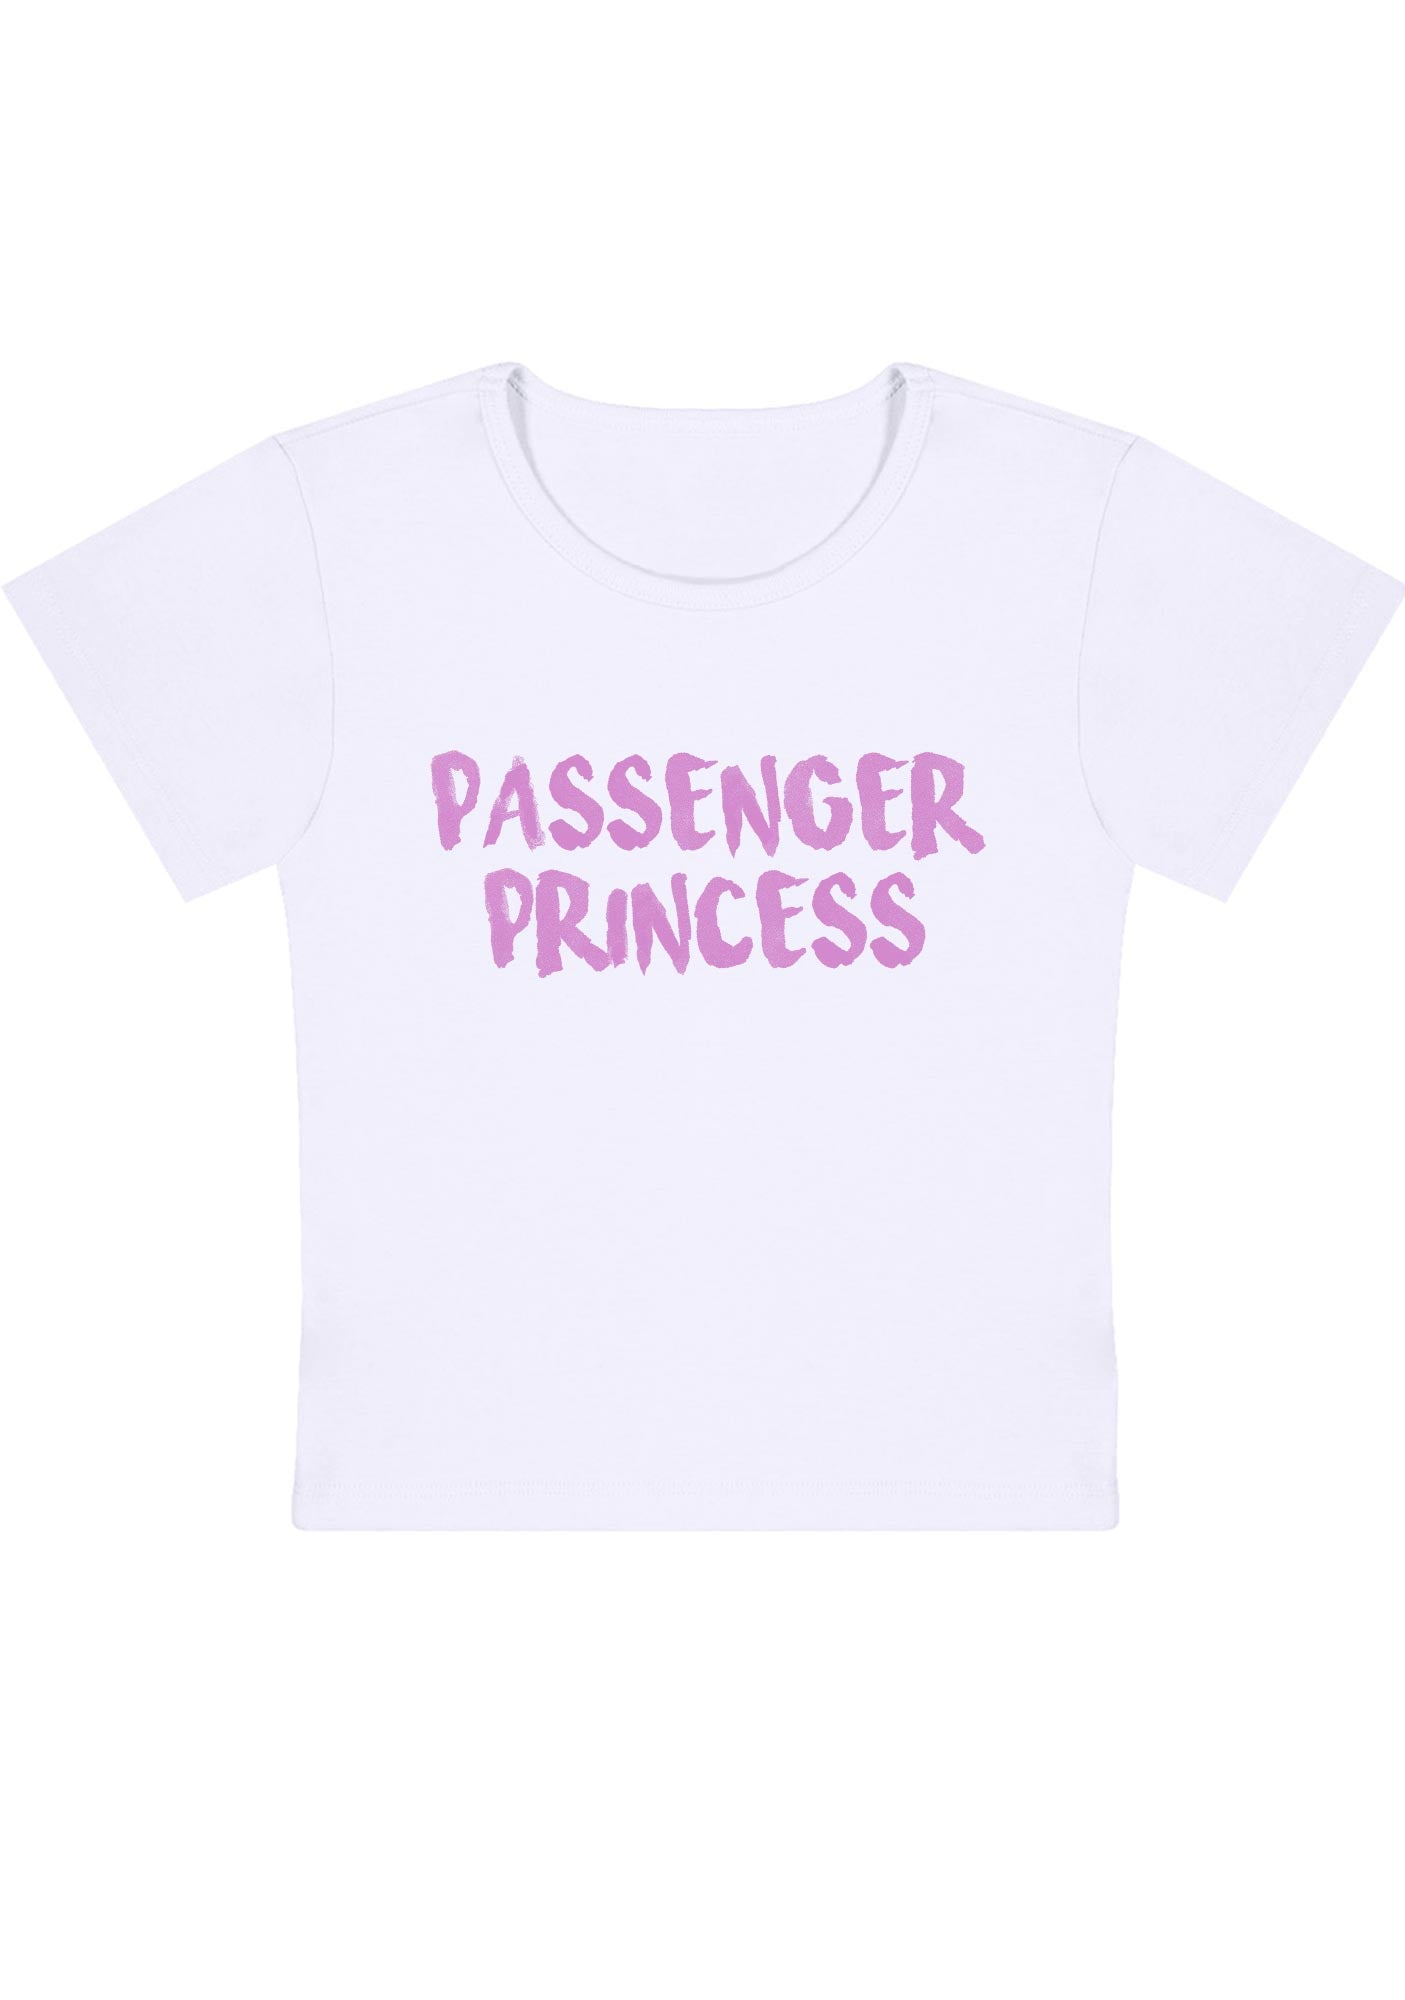 Curvy Passenger Princess Baby Tee